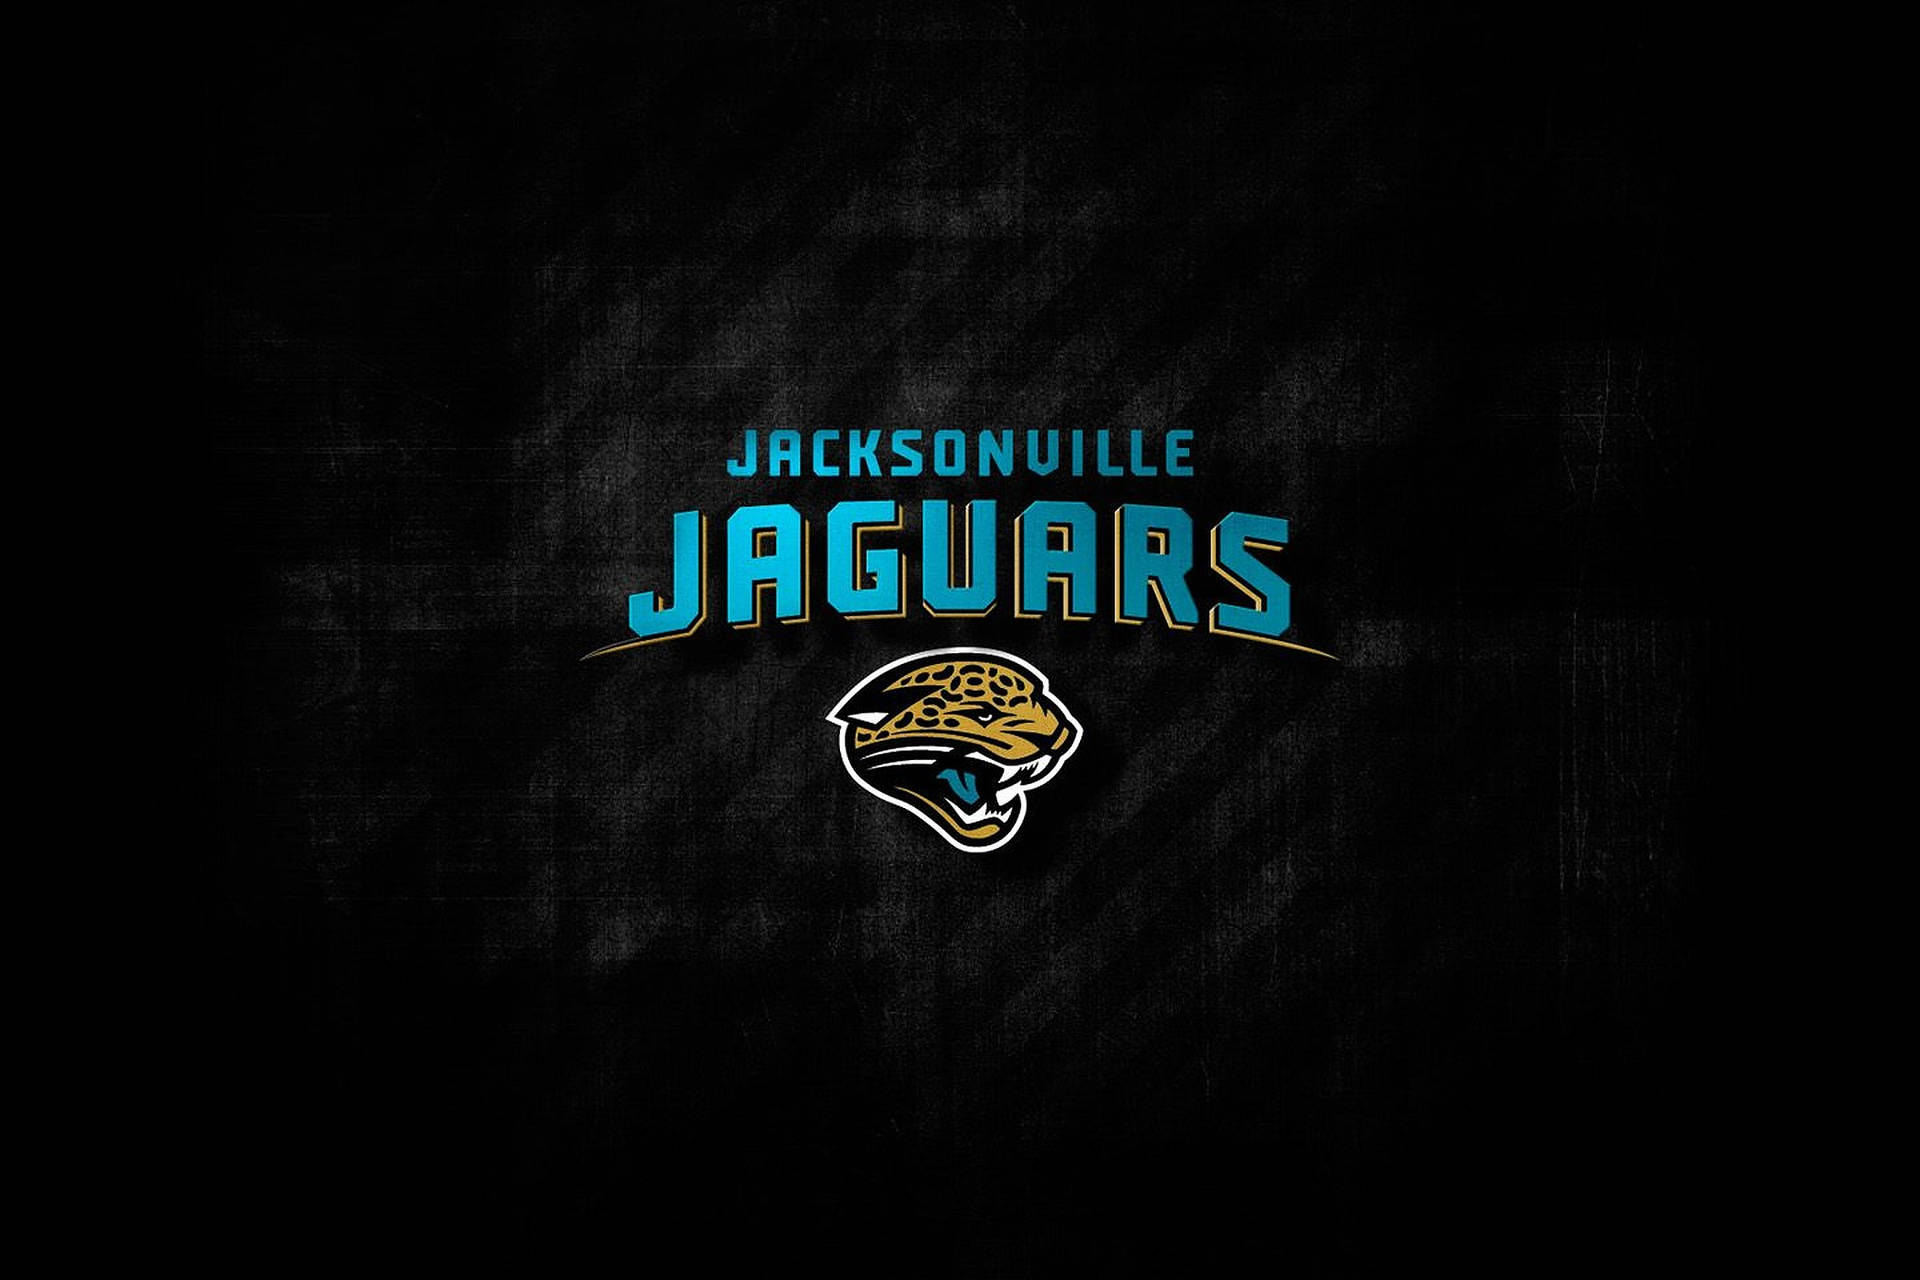 Jacksonville Jaguars In The Dark Wallpaper